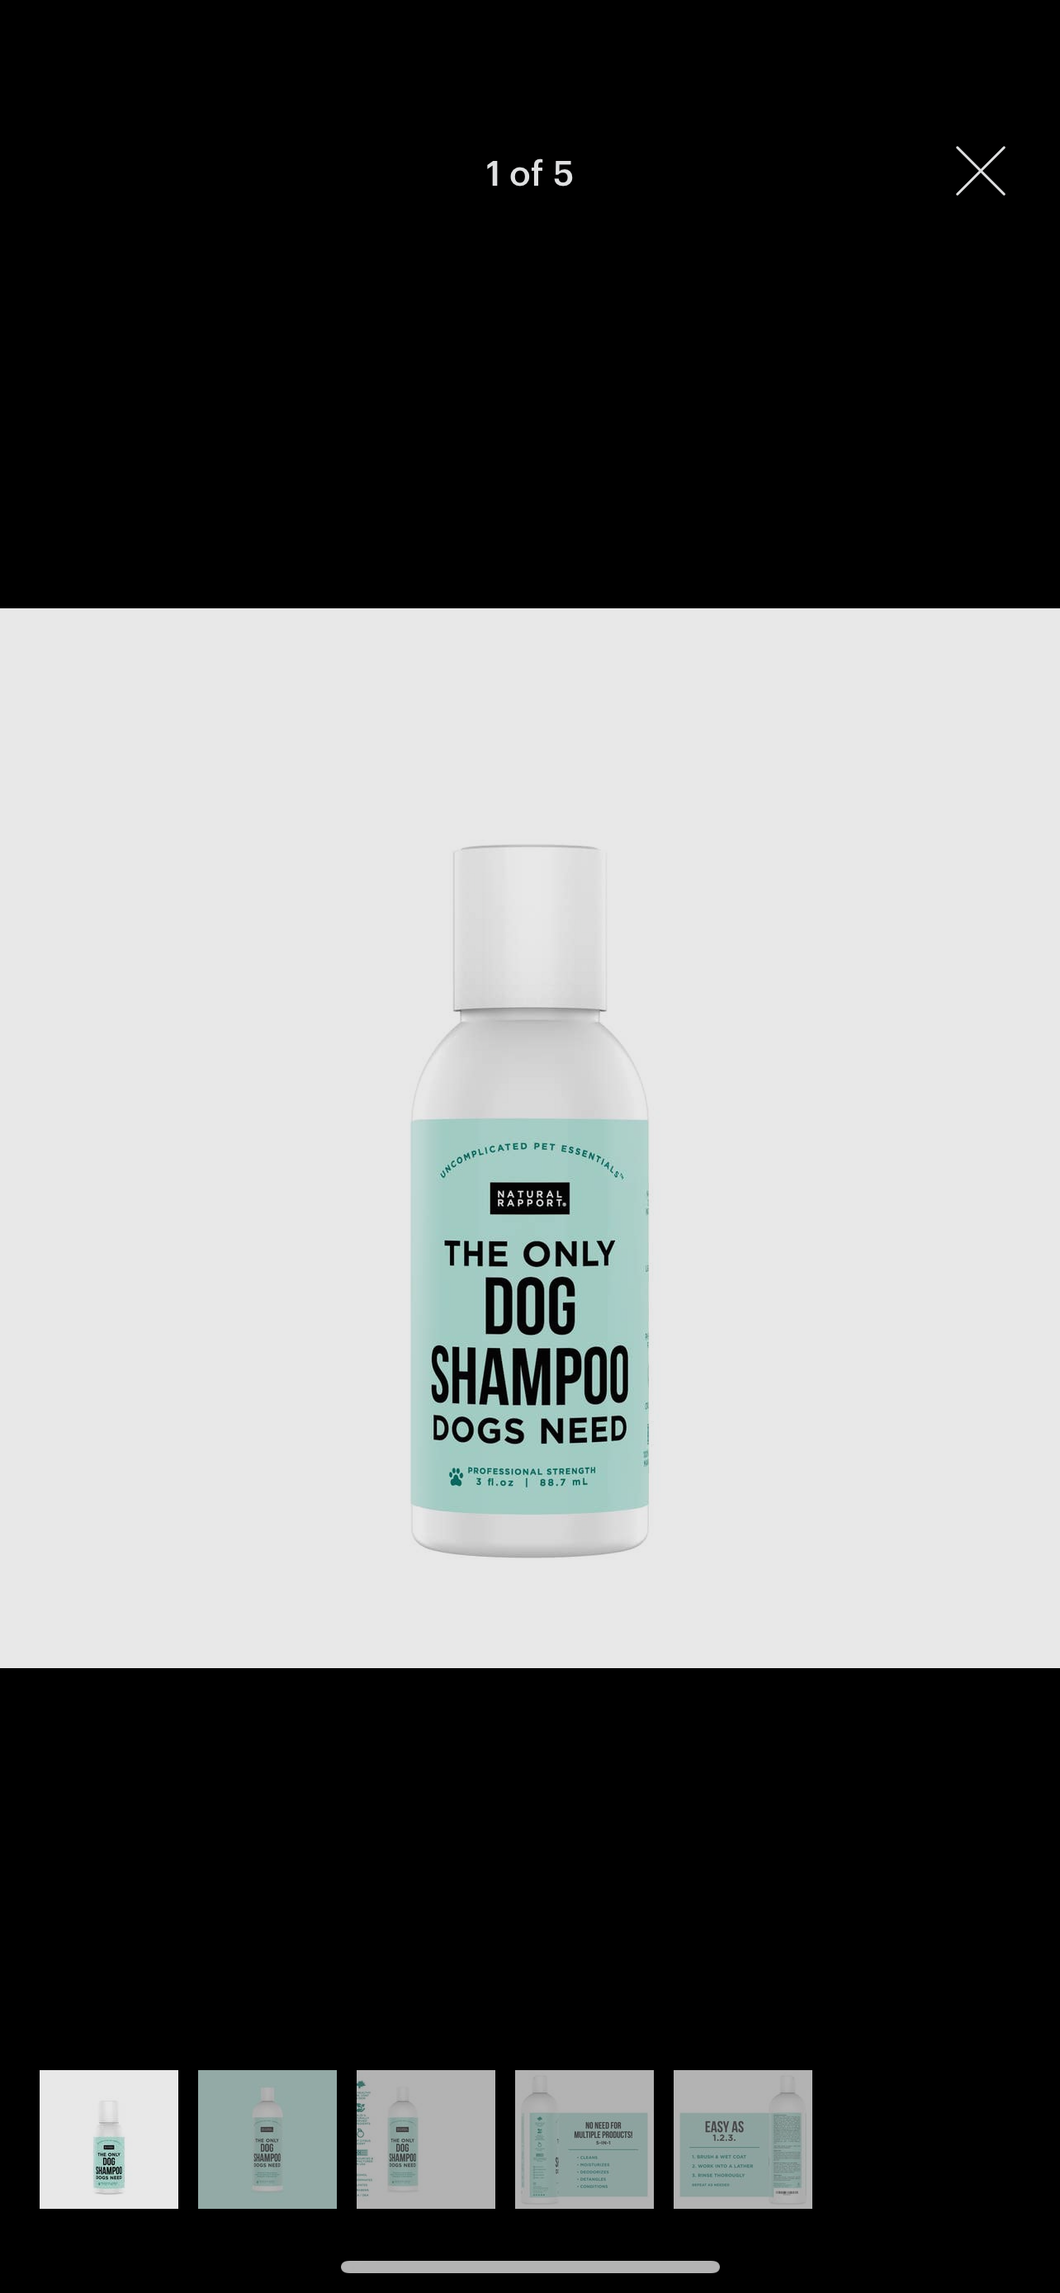 Natural Rapport Dog Shampoo